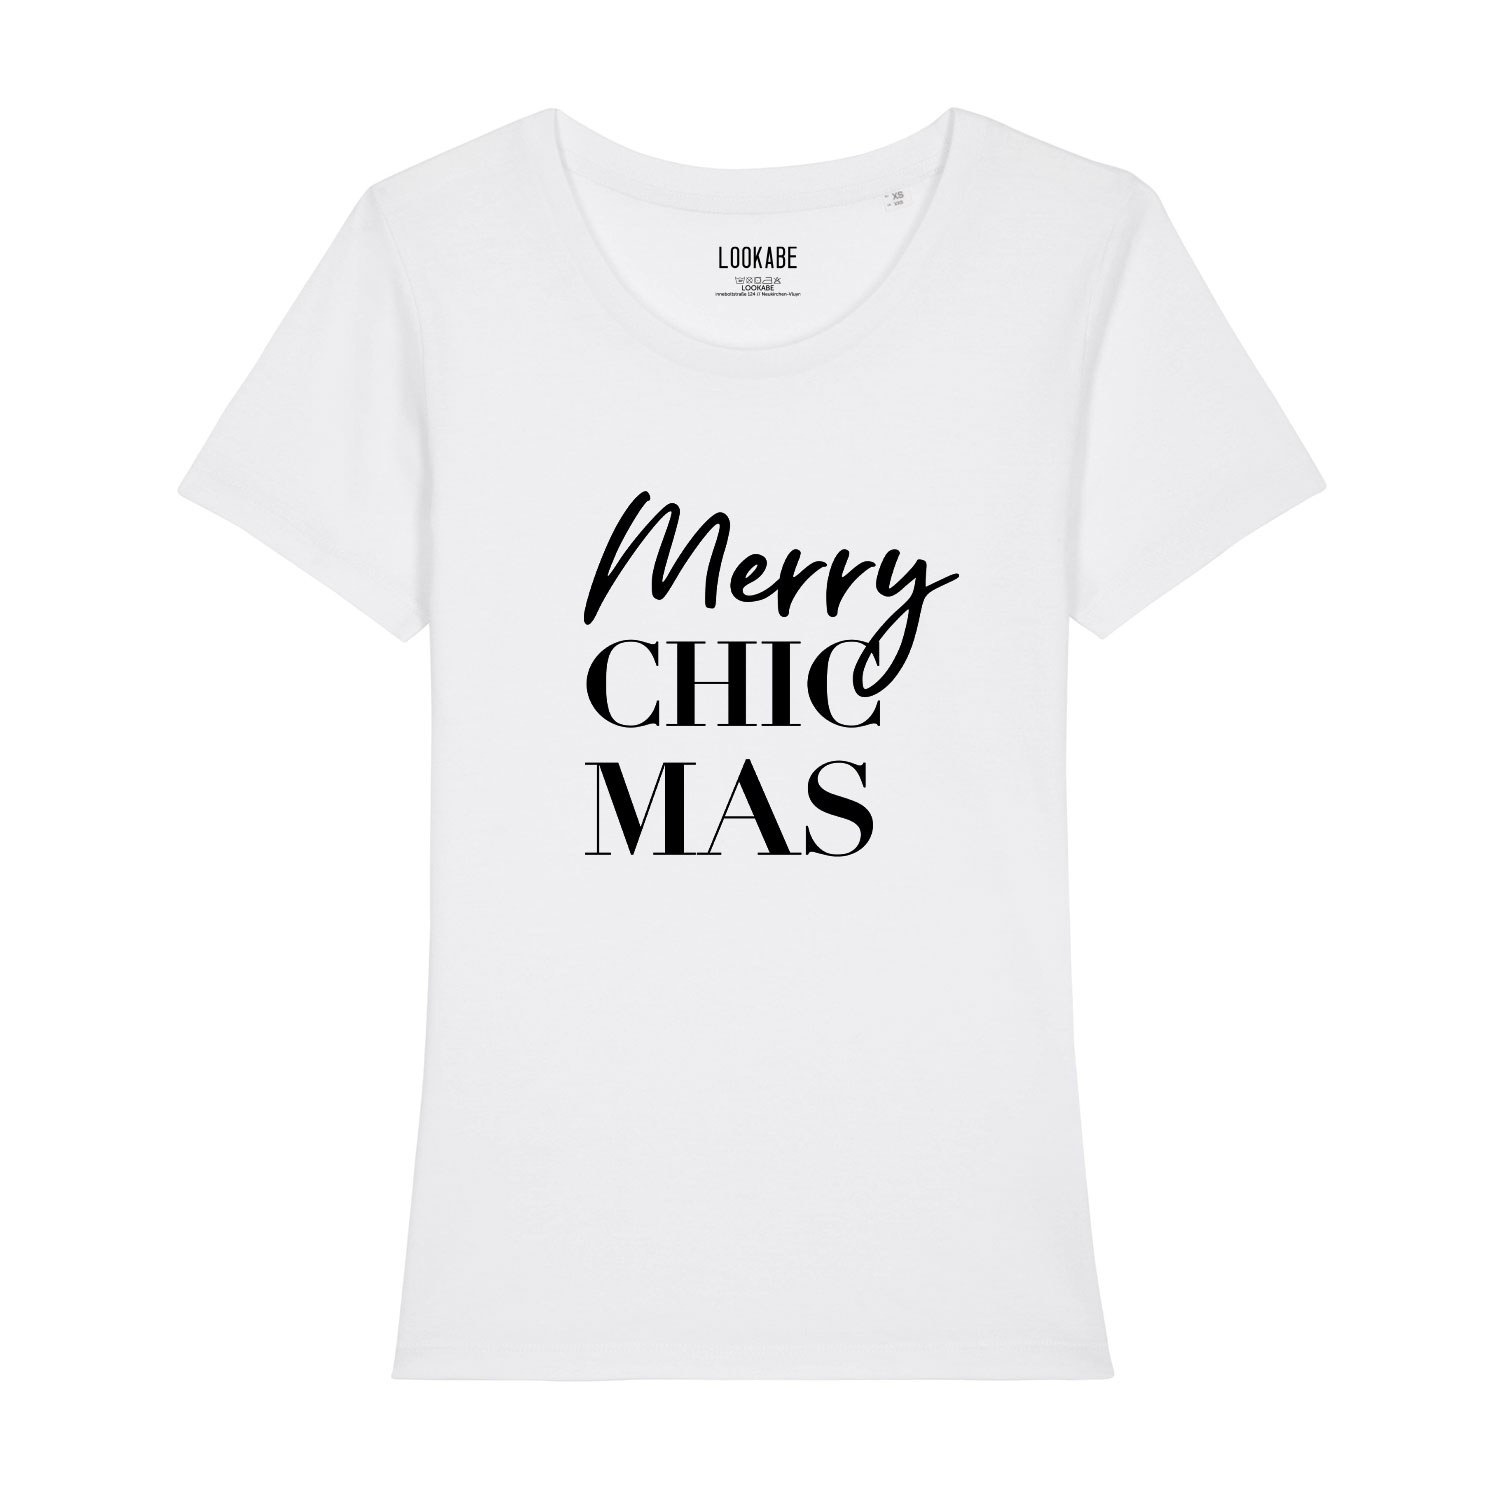 XMAS T-Shirt - Merry Chicmas